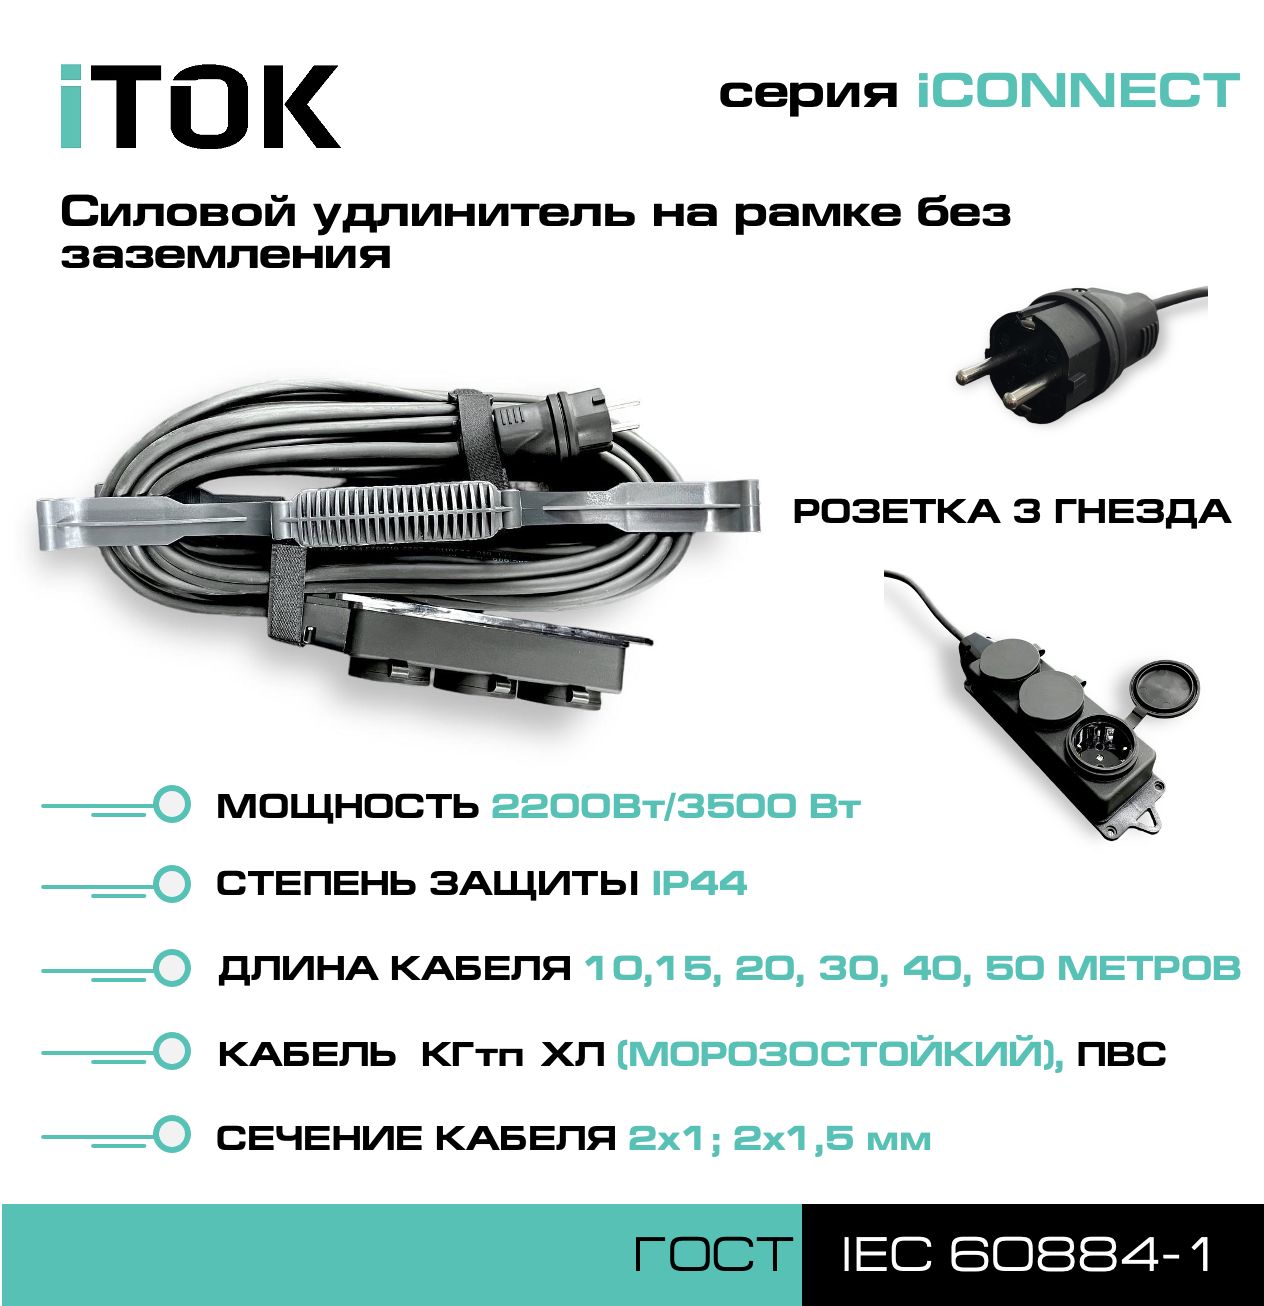 Удлинитель на рамке без земли серии iTOK iCONNECT КГтп-ХЛ 2х1,5 мм 3 гнезда IP44 10 м